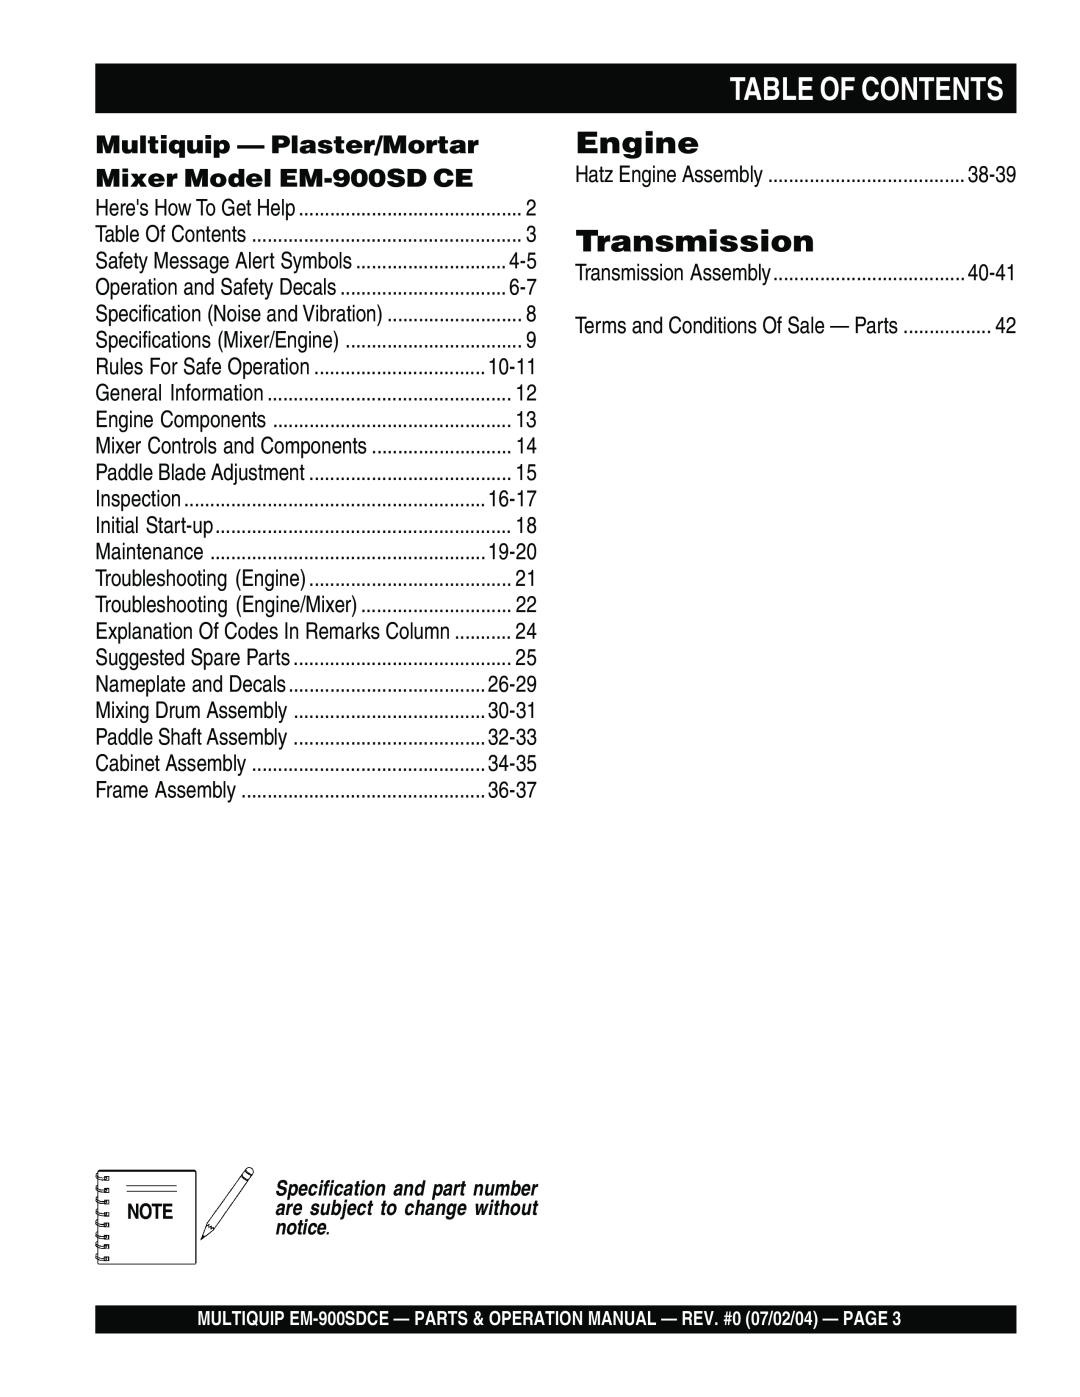 Multiquip manual Table Of Contents, Engine, Transmission, Multiquip - Plaster/Mortar Mixer Model EM-900SD CE 